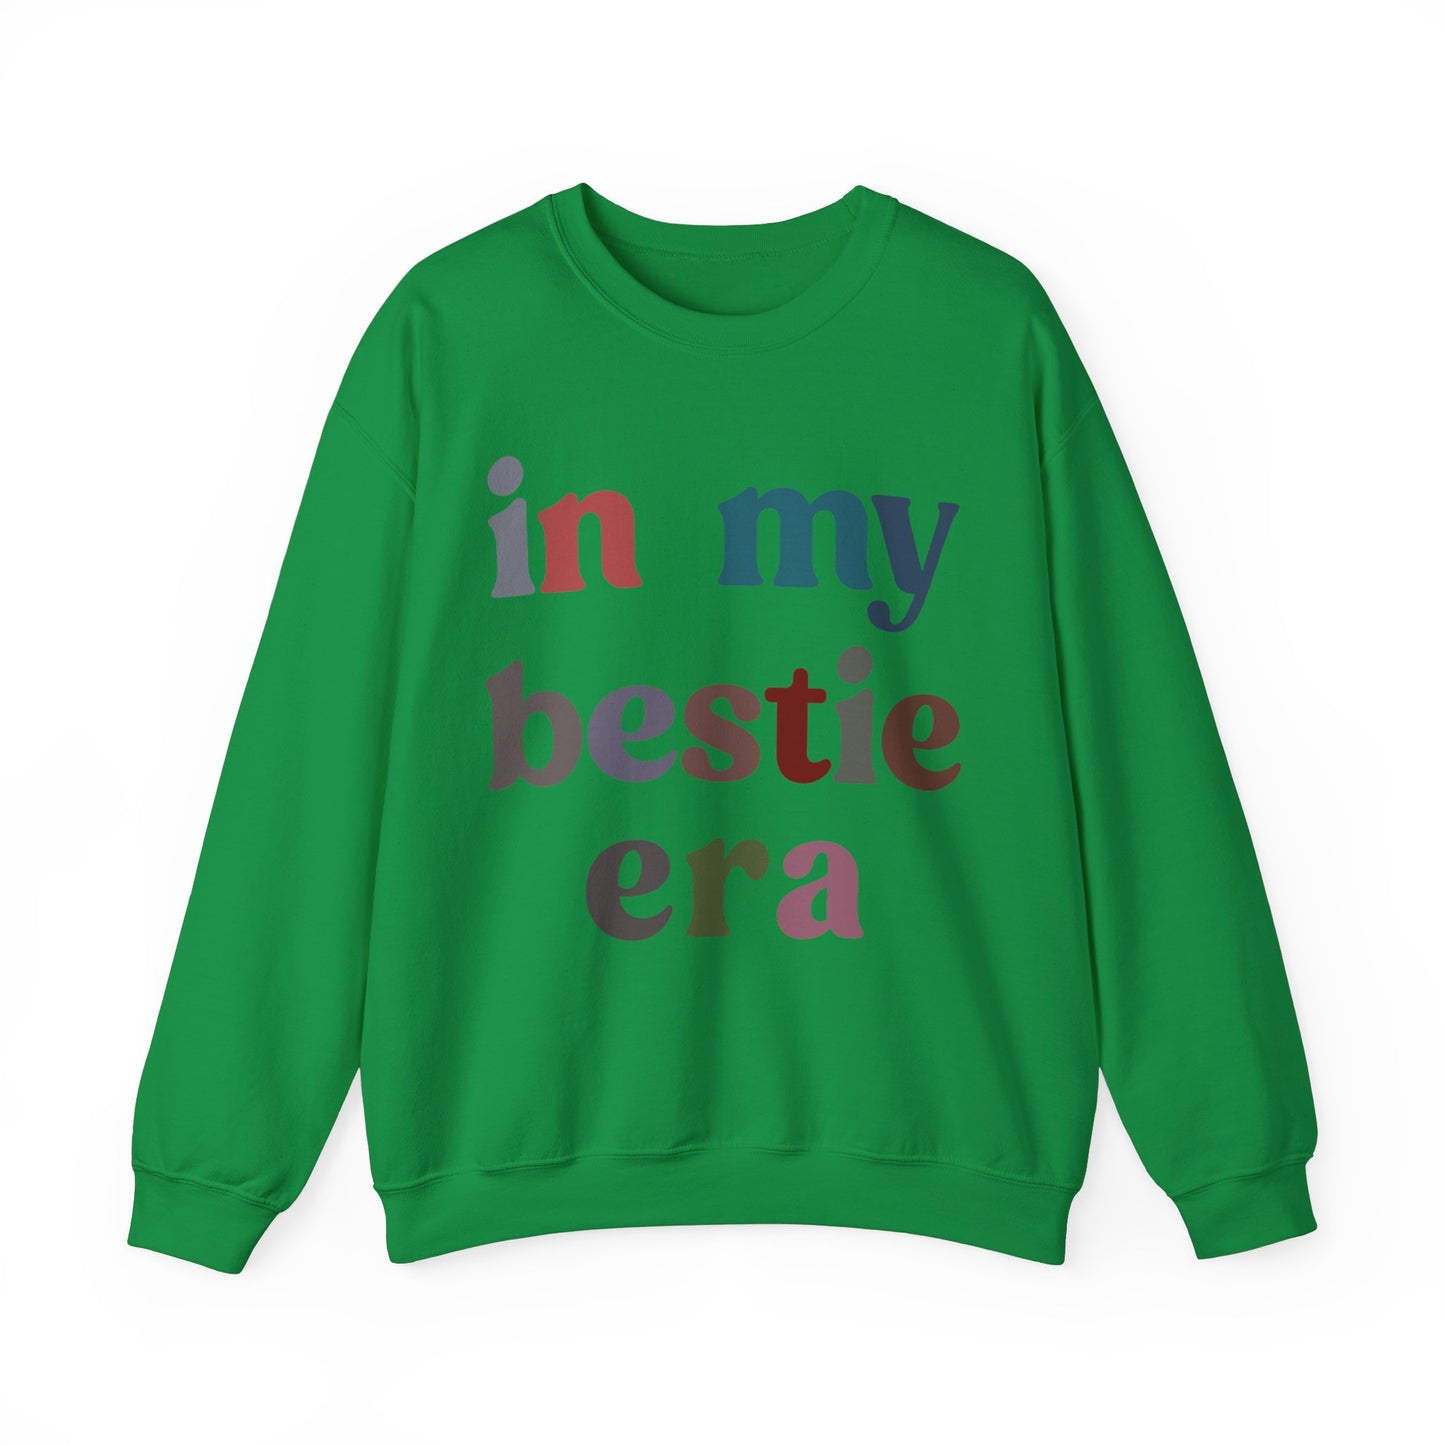 In My Bestie Era Sweatshirt, BFF Shirt for Women, Friendship Gift, Best Friends Forever Sweatshirt, Matching Bestie Sweatshirt, S1427